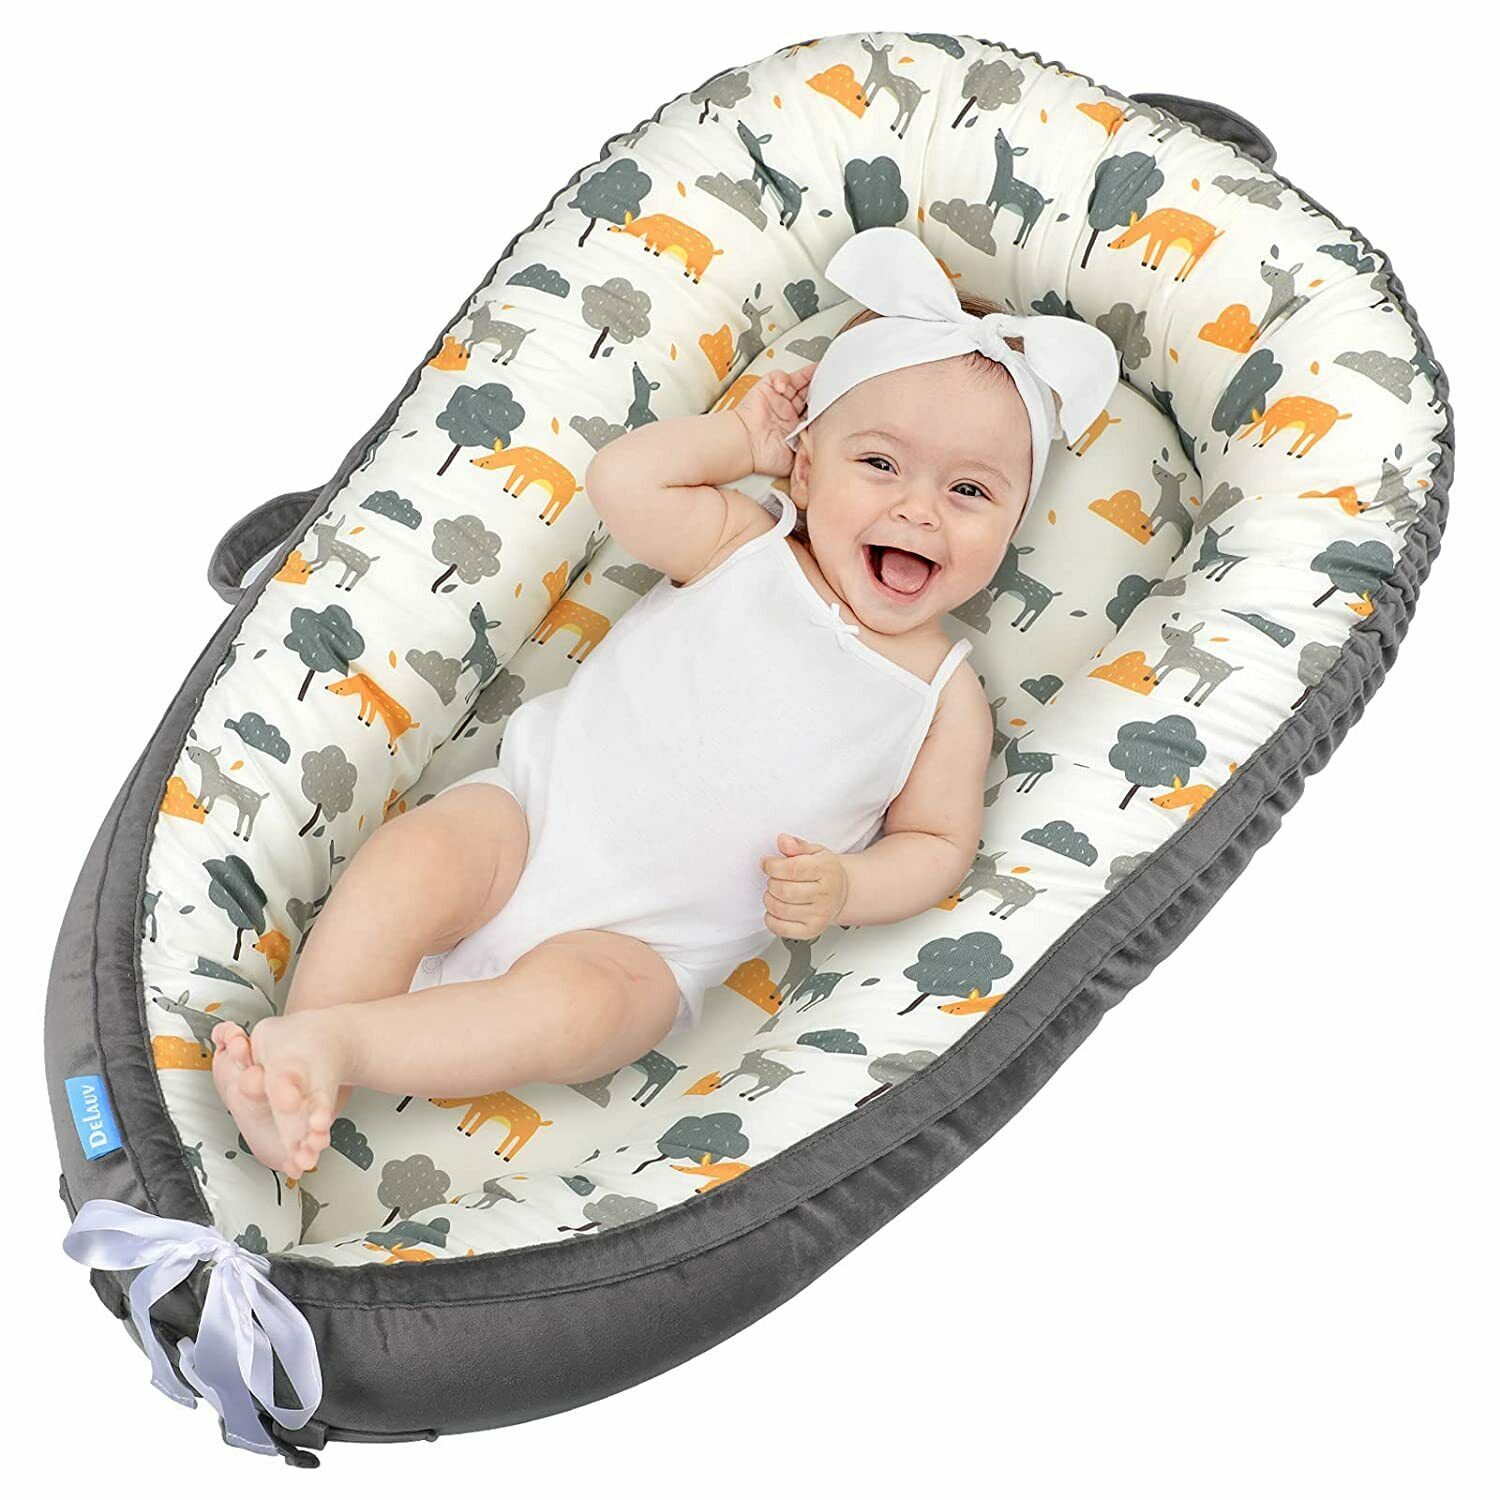 Newborn Baby Nest Pod Lounger Infant Crib Bionic Bed Soft Breathable Cotton Foam